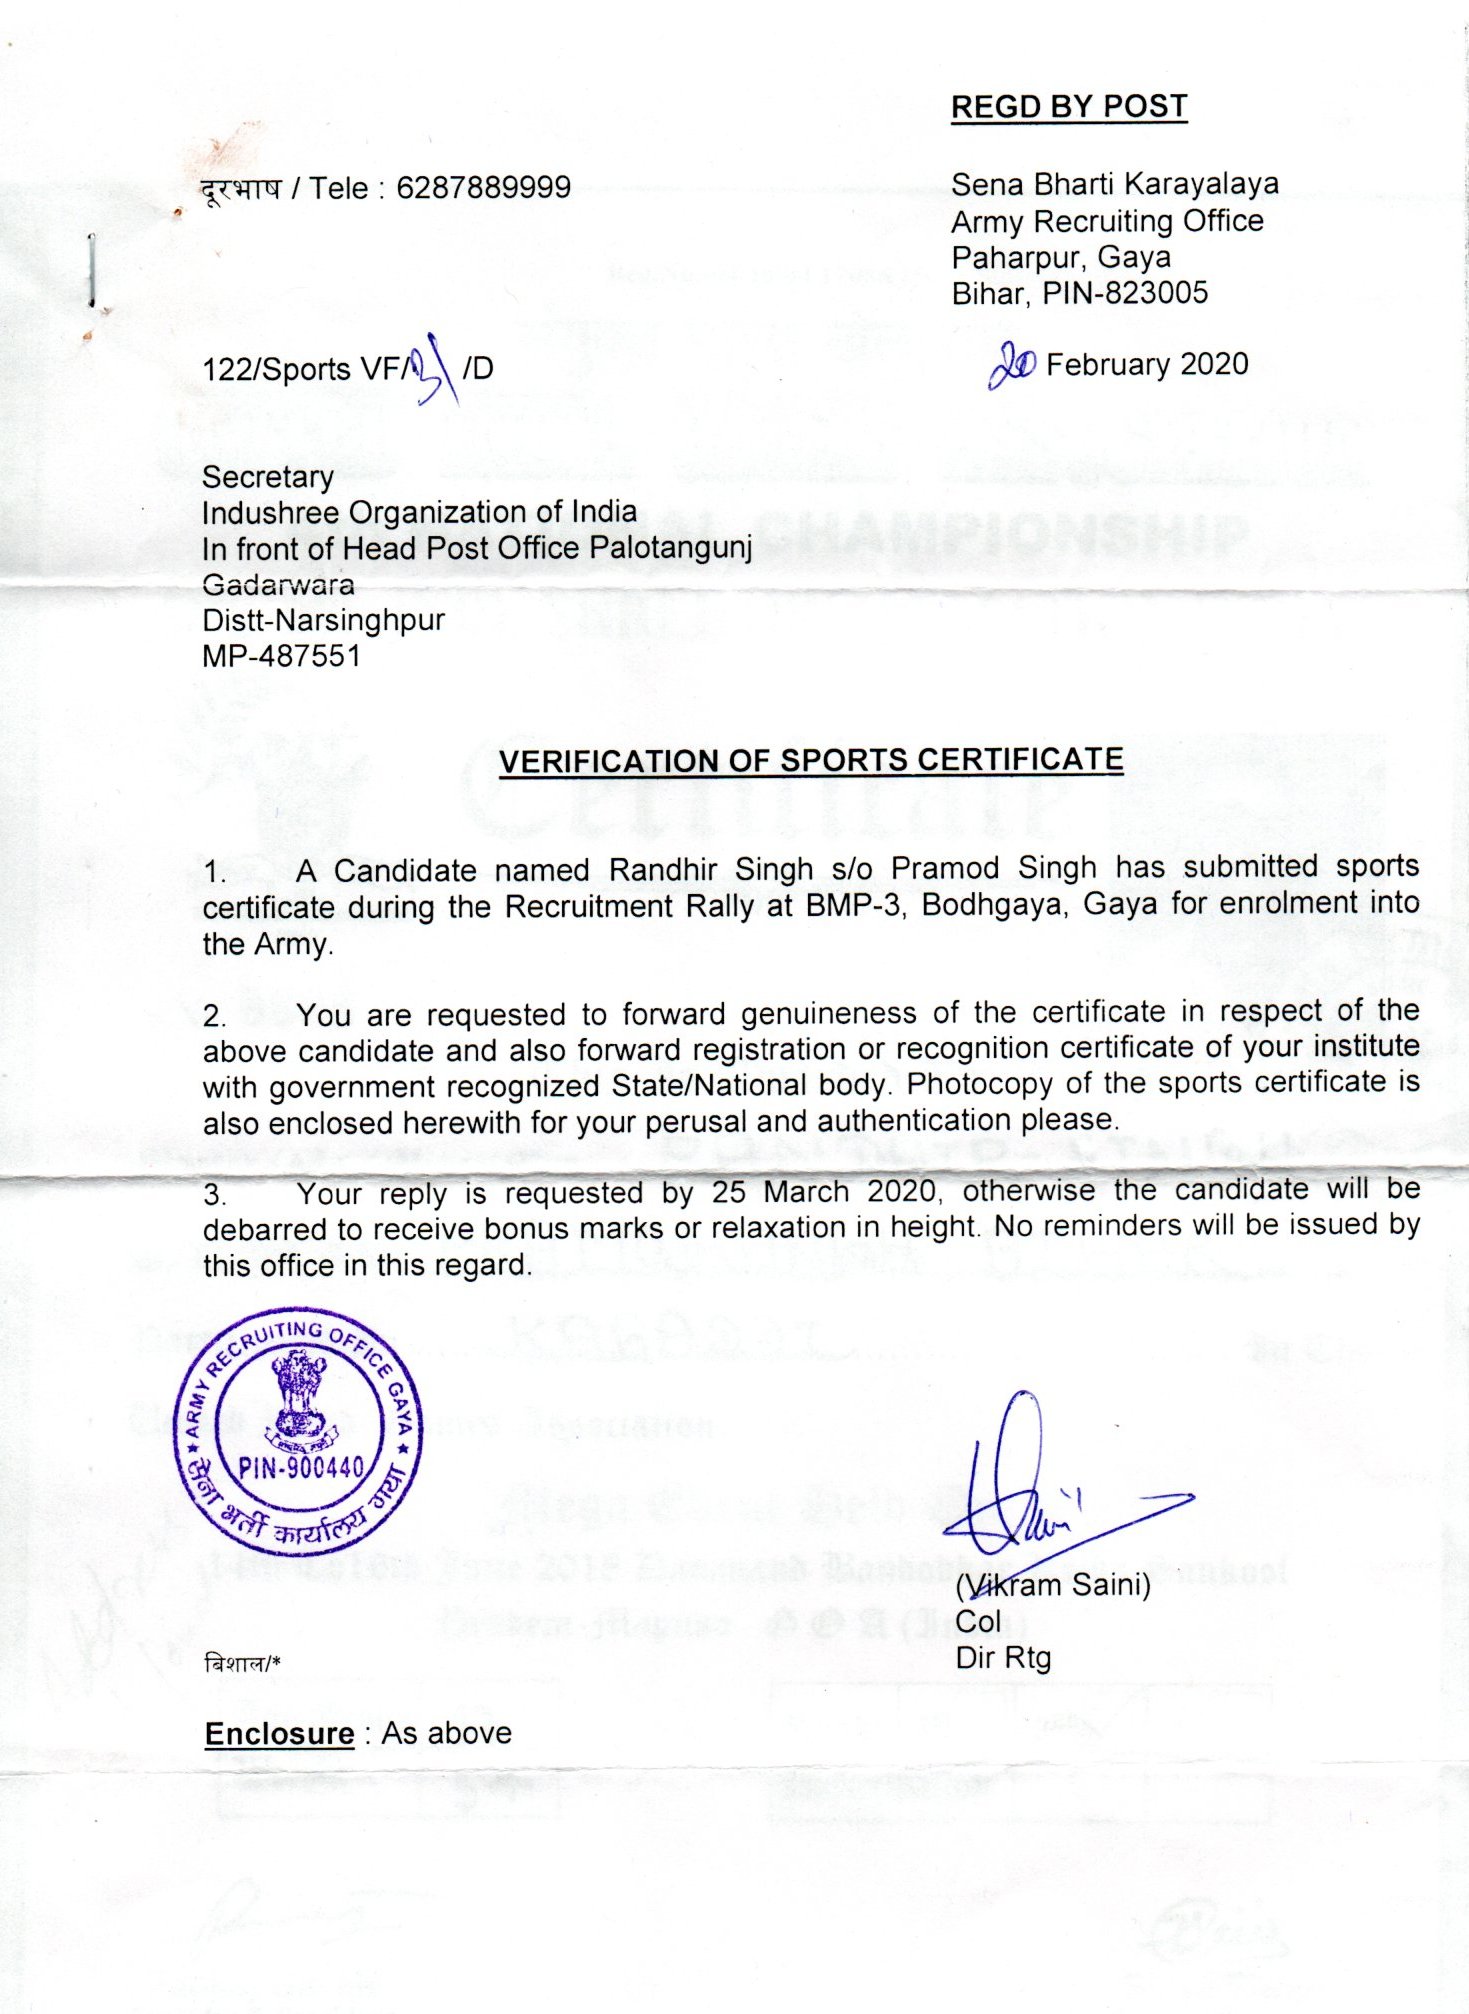 Sena Bharti Karayalaya Army Recruiting Office Paharpur, Gaya 2020 Bihar - PIN - 823005